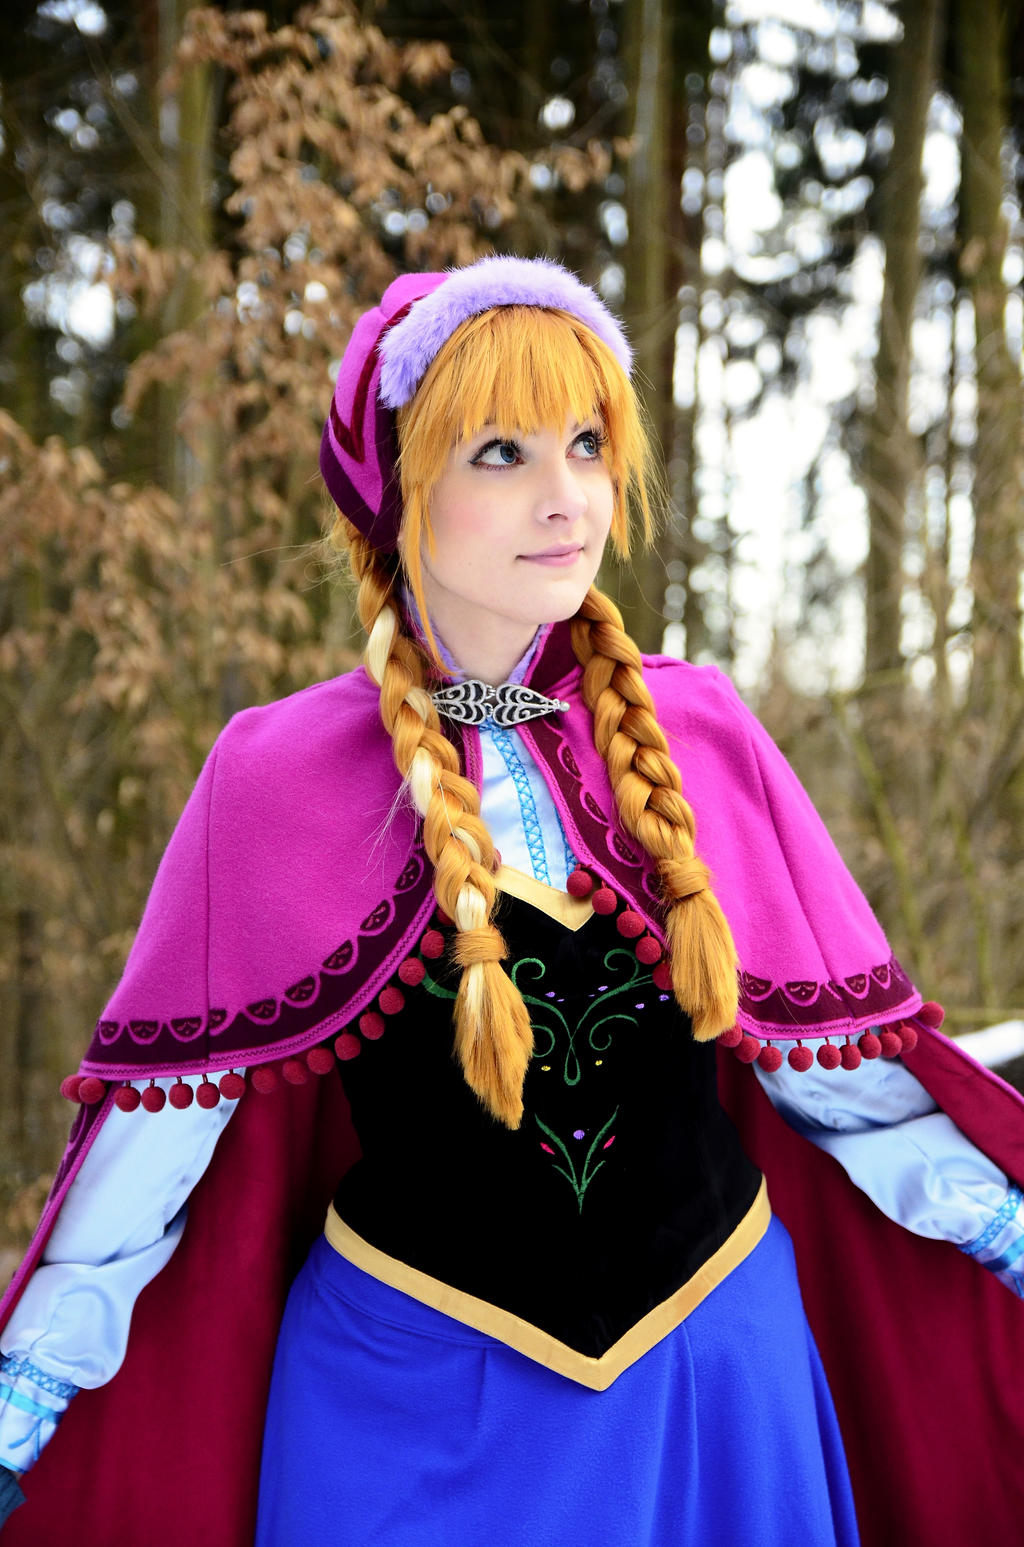 Princess Anna of Arendelle - Frozen Cosplay by lavenderRea on DeviantArt